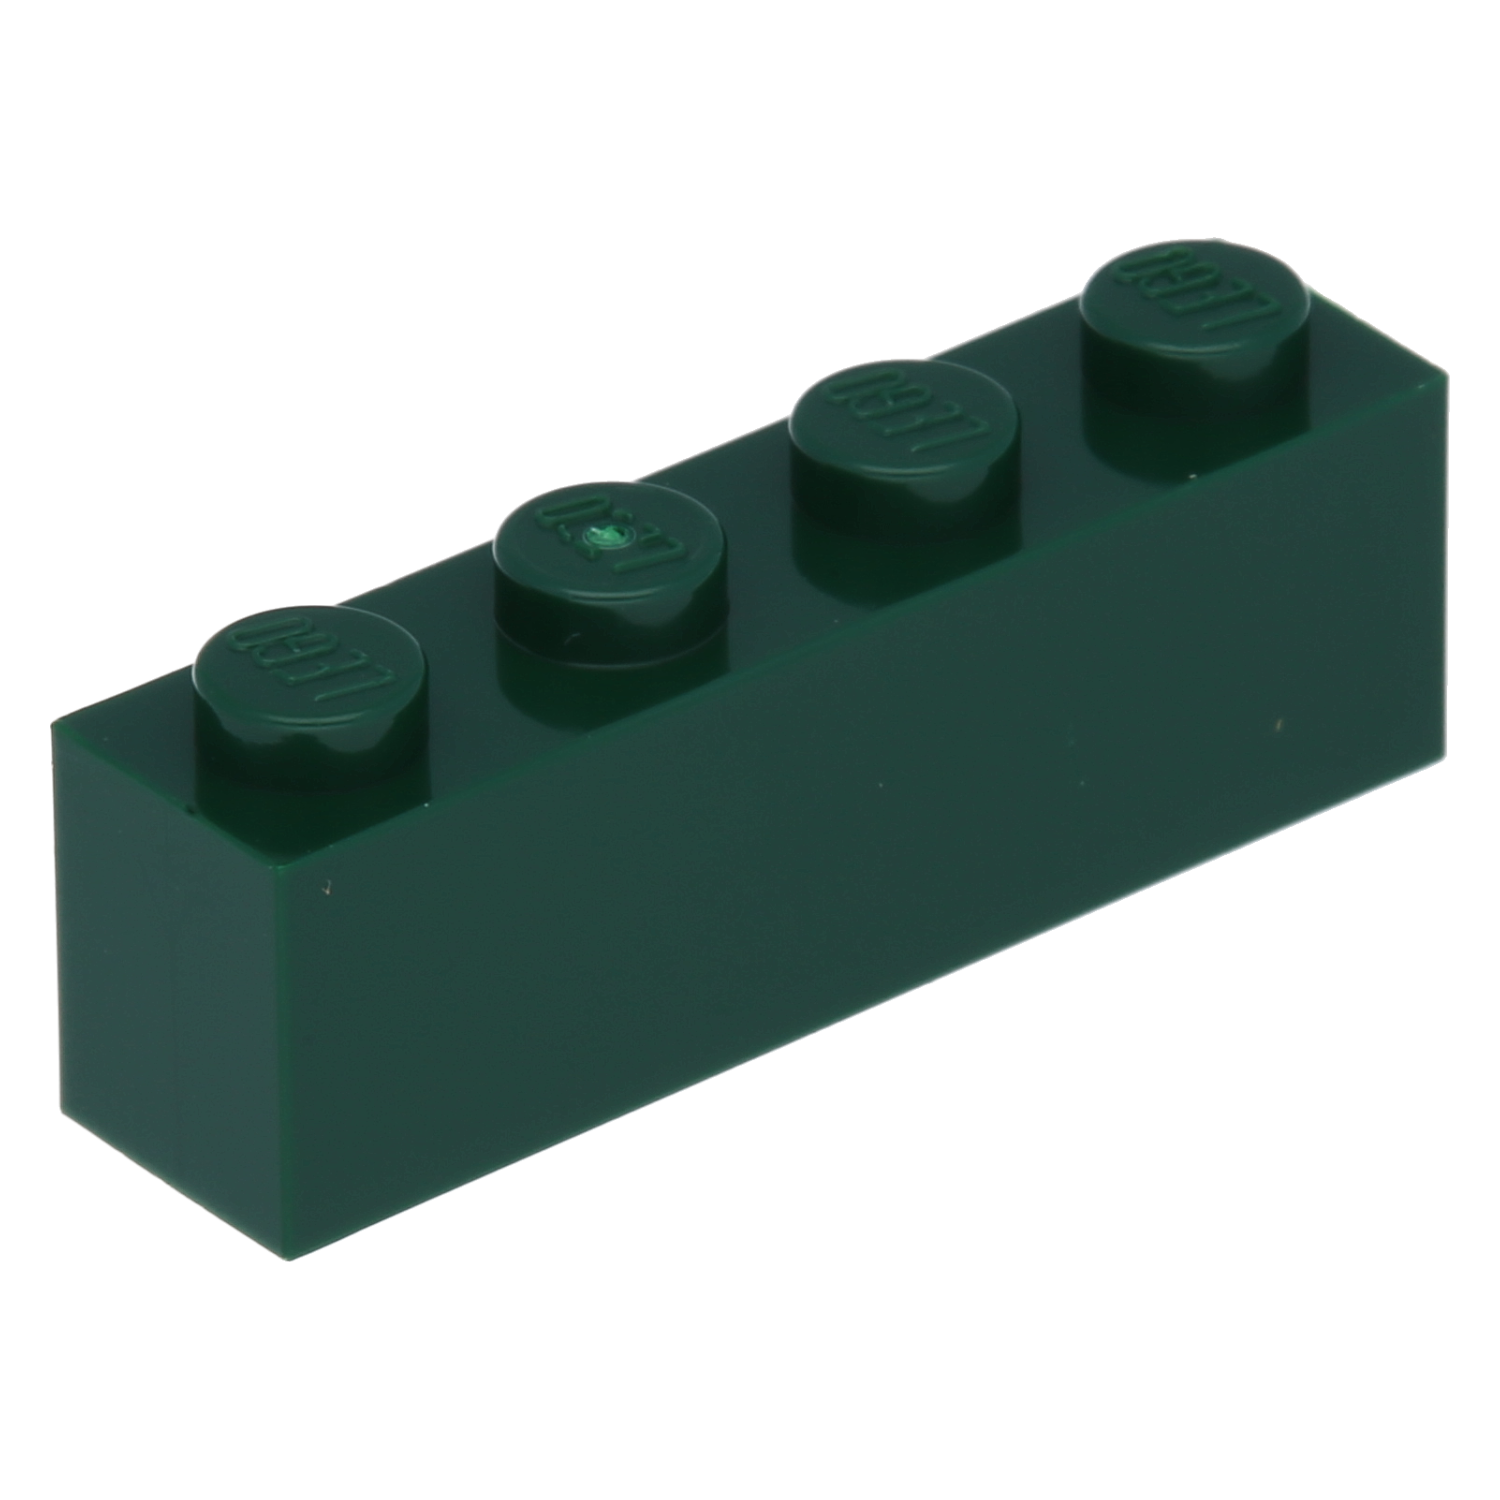 LEGO stones (standard) - 1 x 4